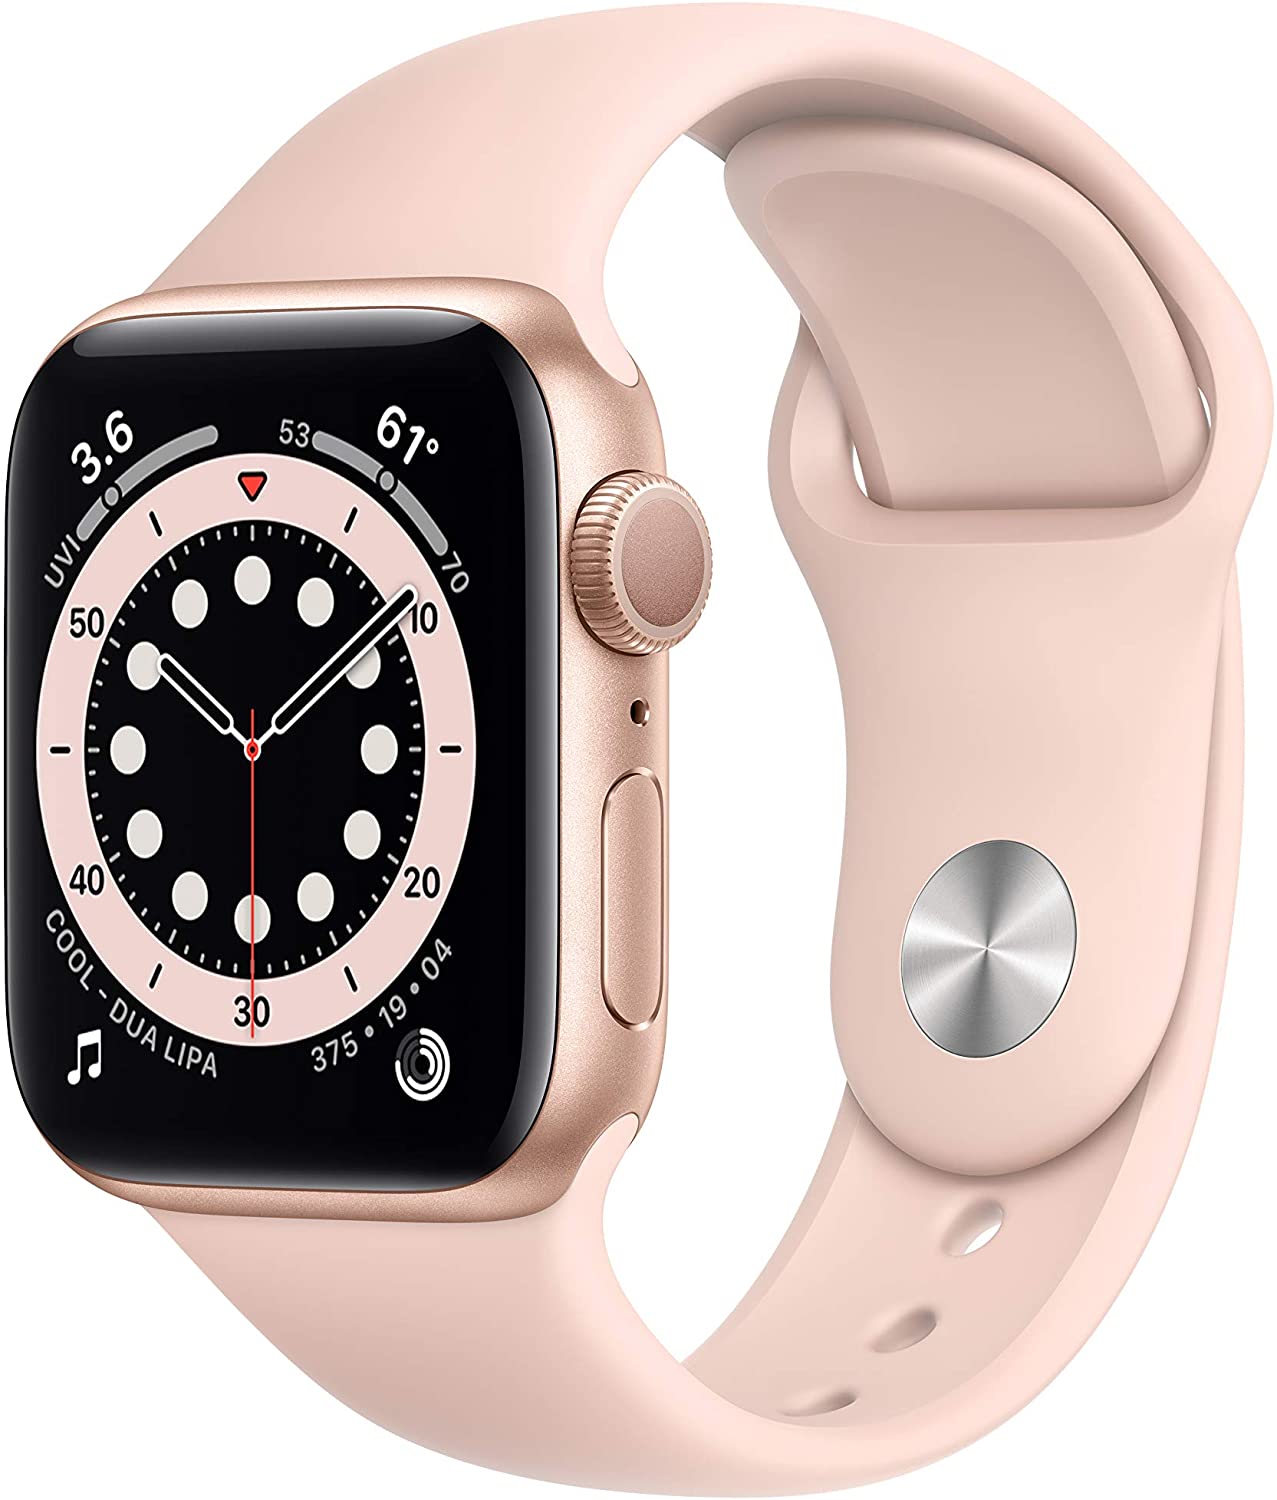 Apple Watch Series 6 GPS (Brand New)